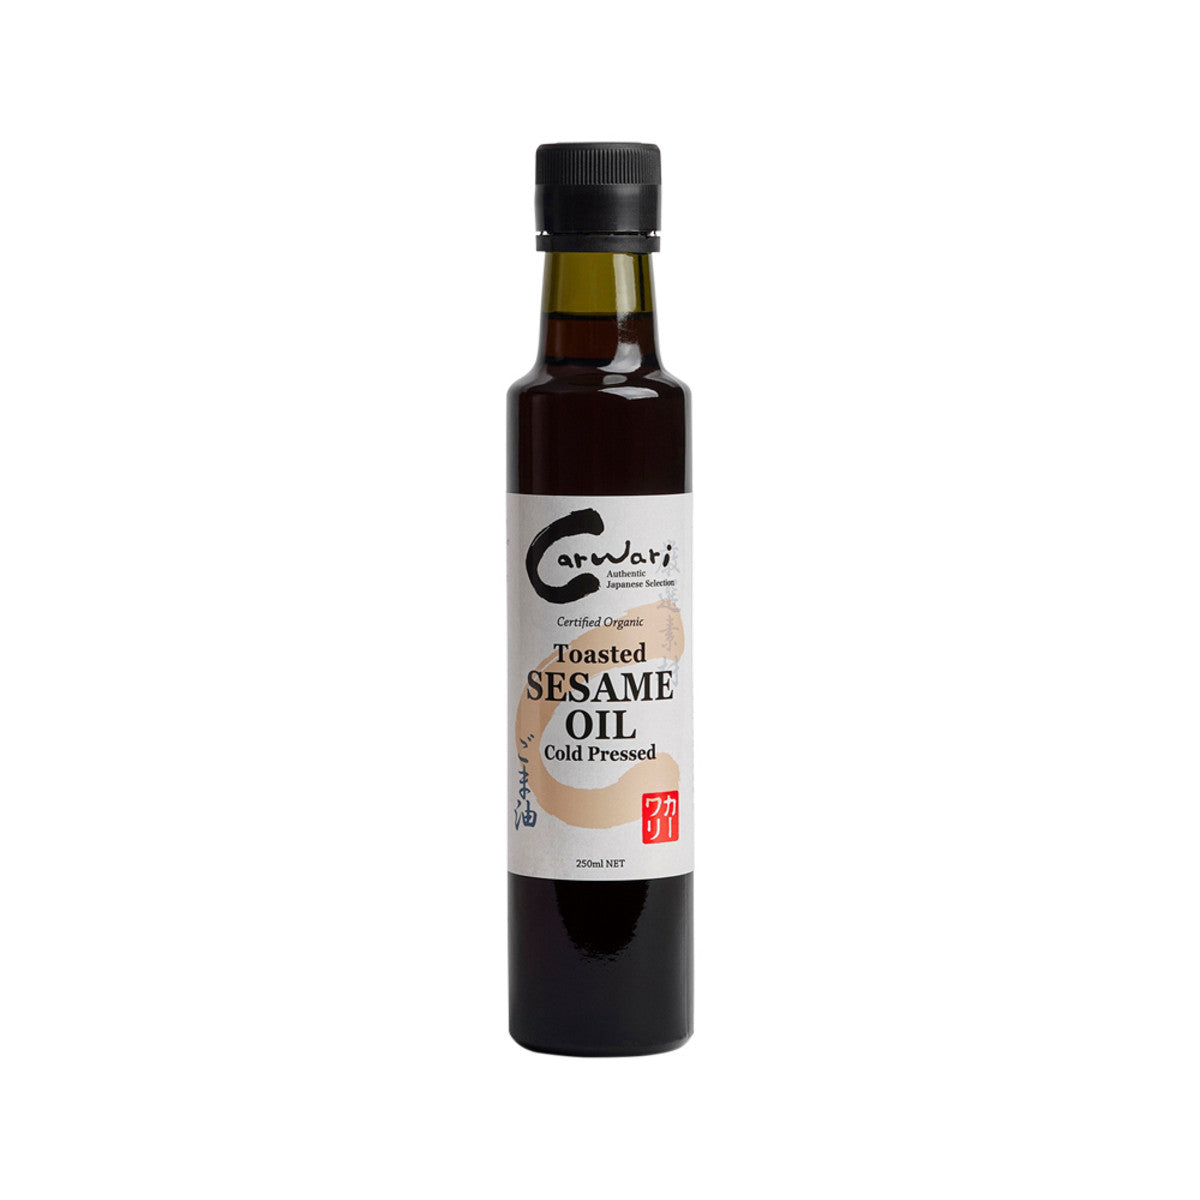 Carwari - Organic Toasted White Sesame Oil